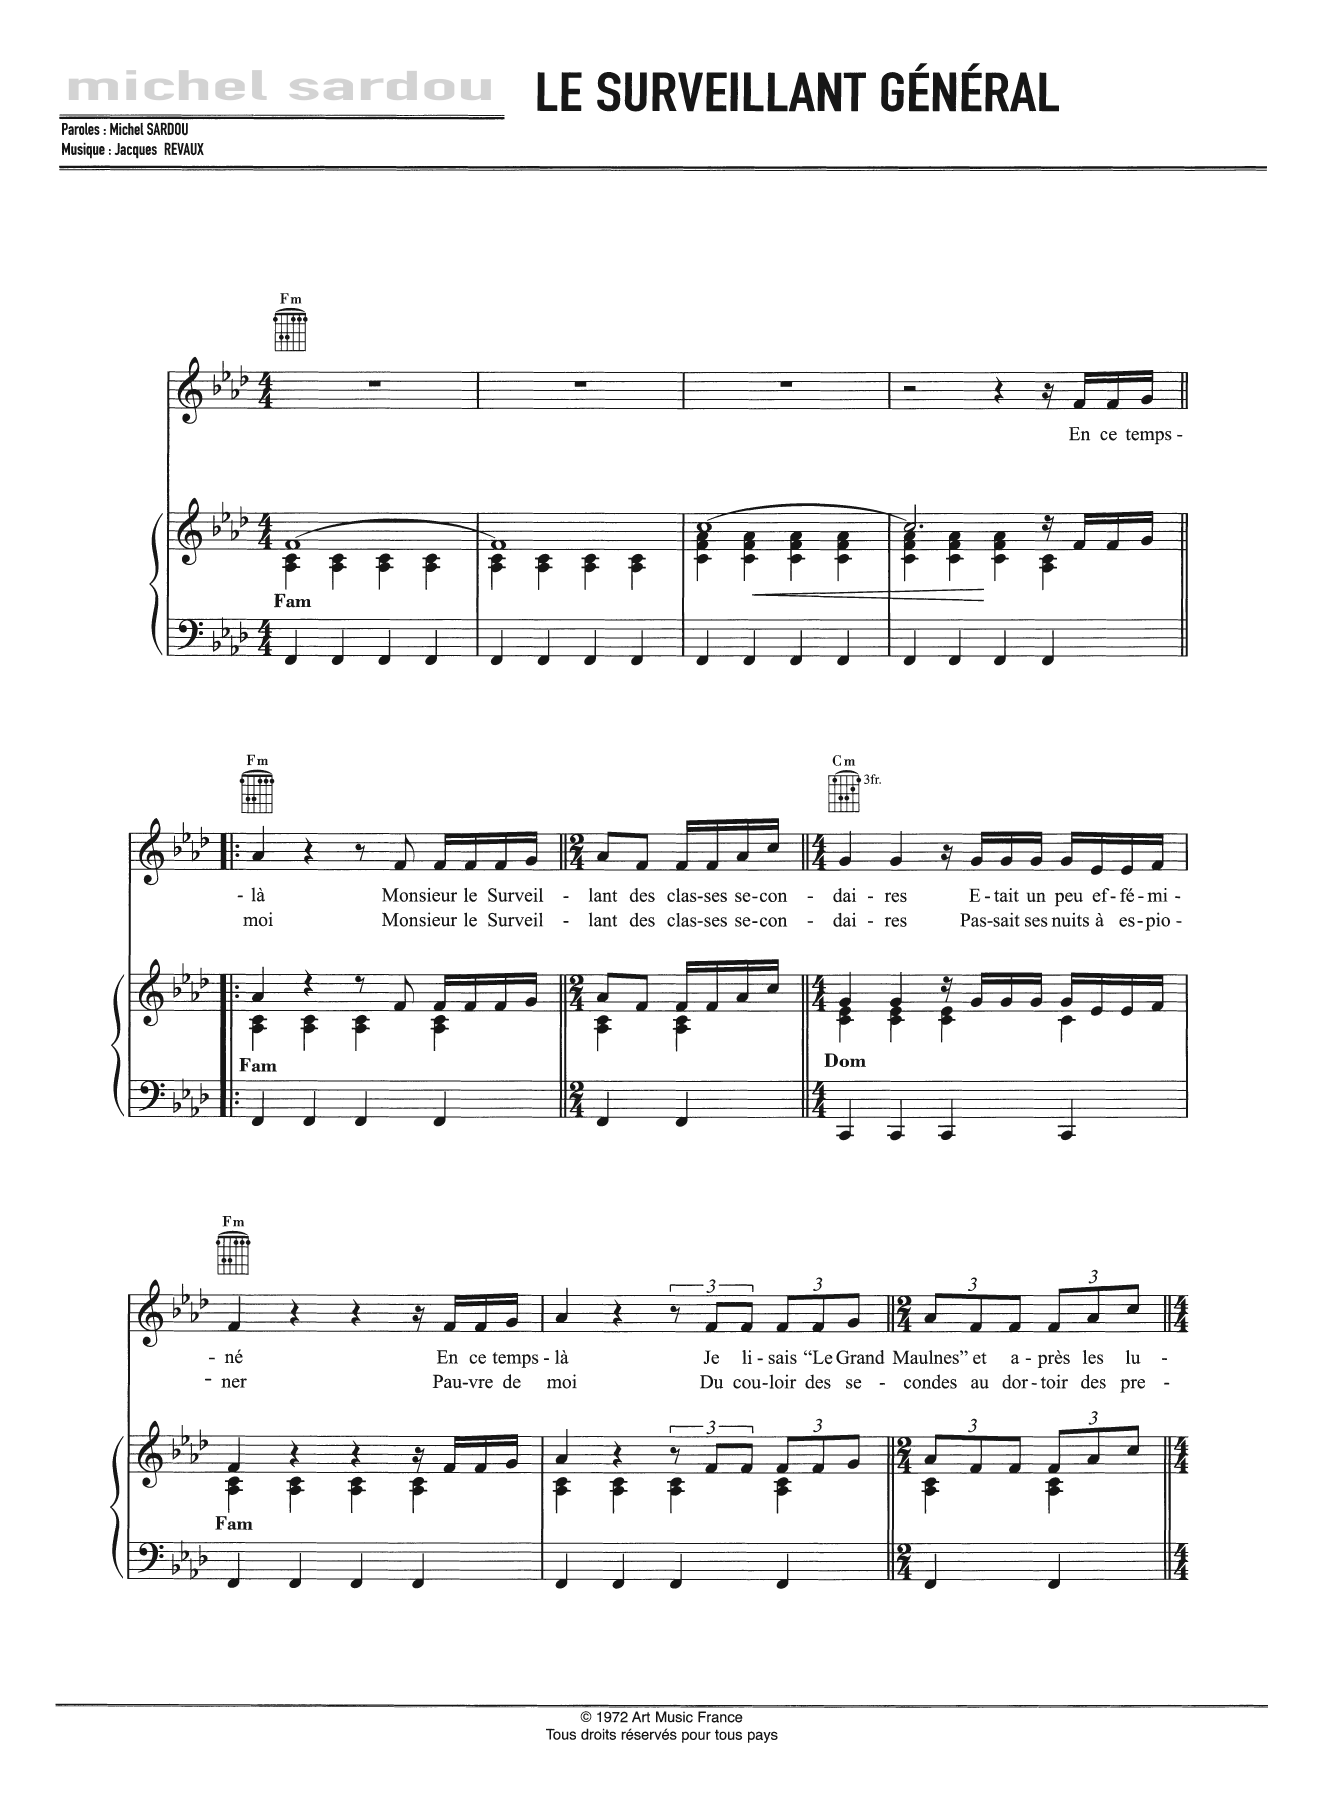 Michel Sardou Le Surveillant General Sheet Music Notes & Chords for Piano, Vocal & Guitar - Download or Print PDF